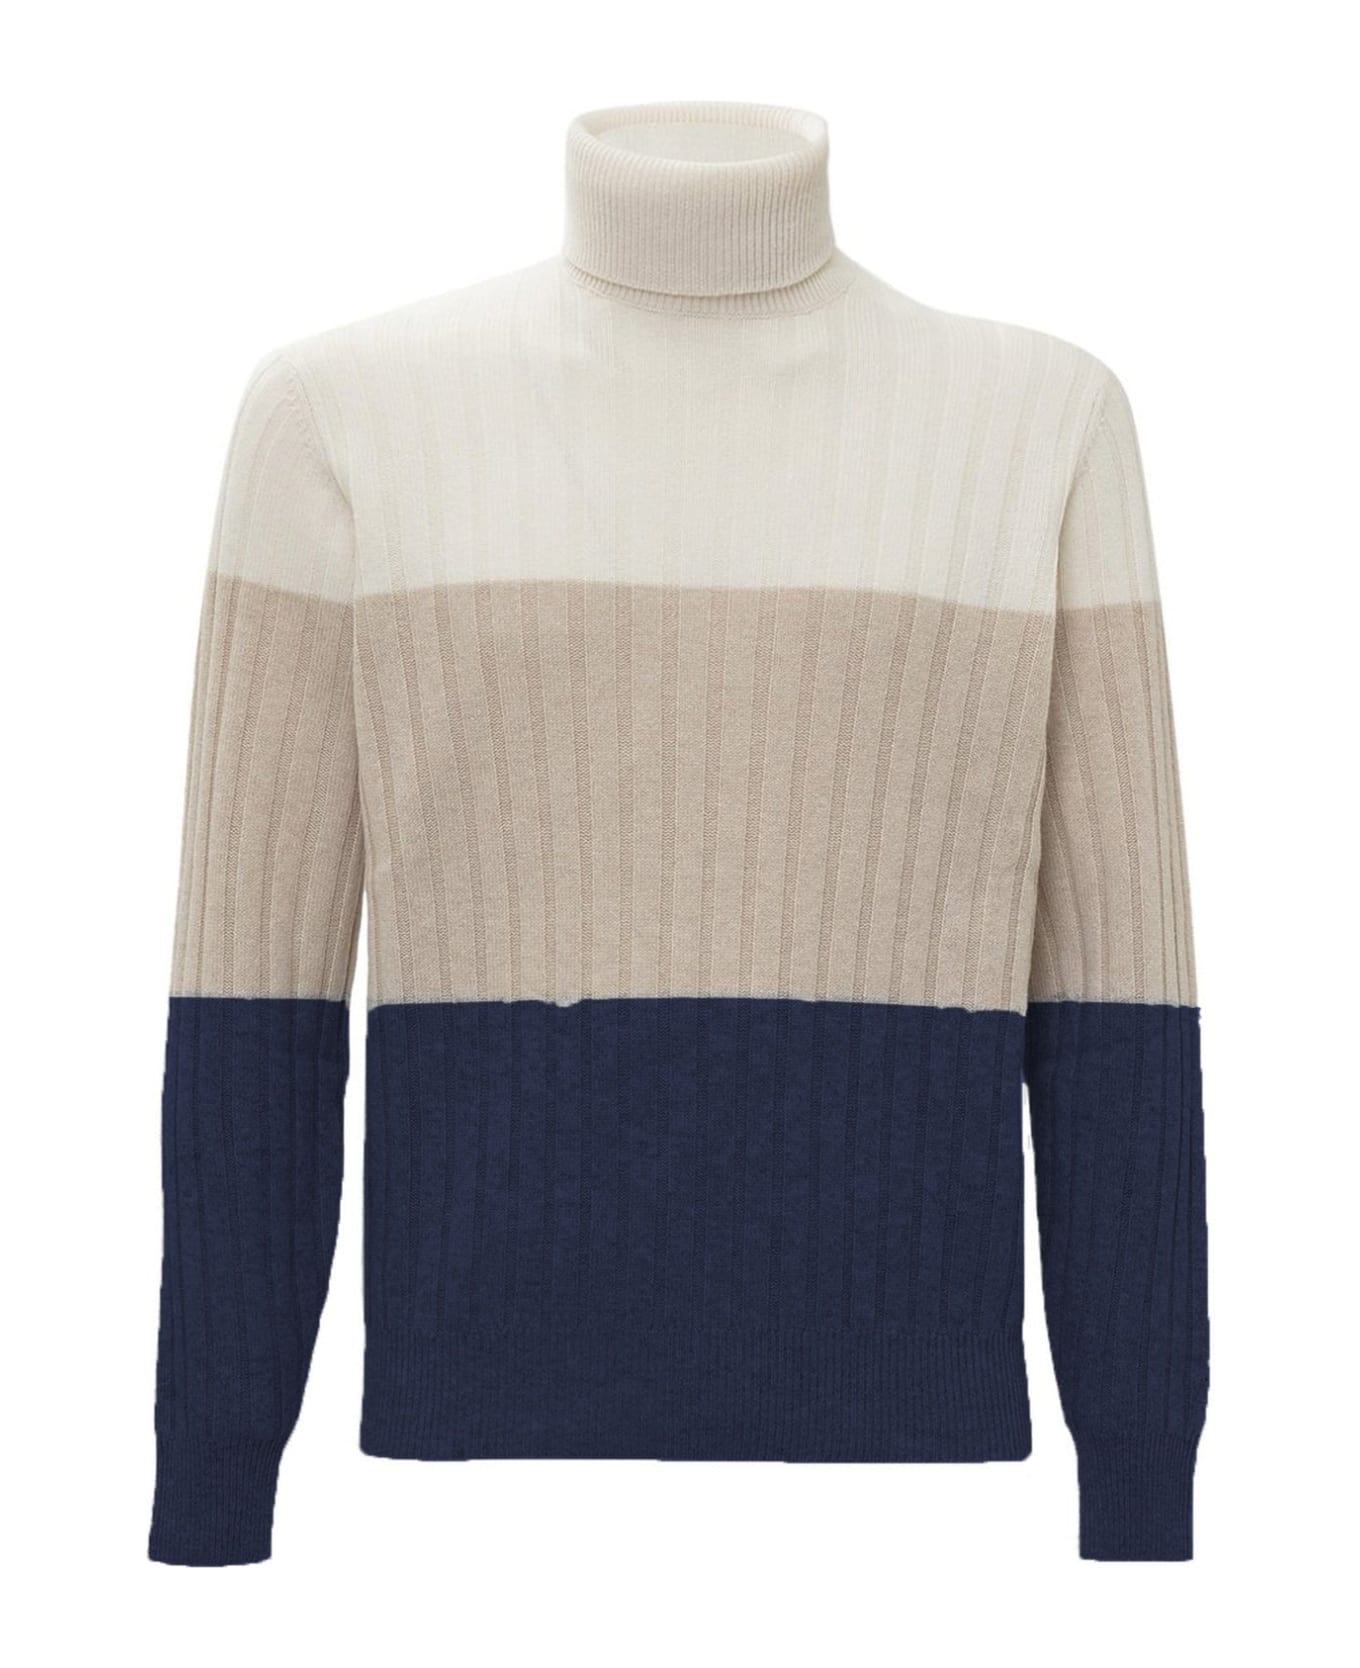 Brunello Cucinelli Wool And Cashmere Sweater - White